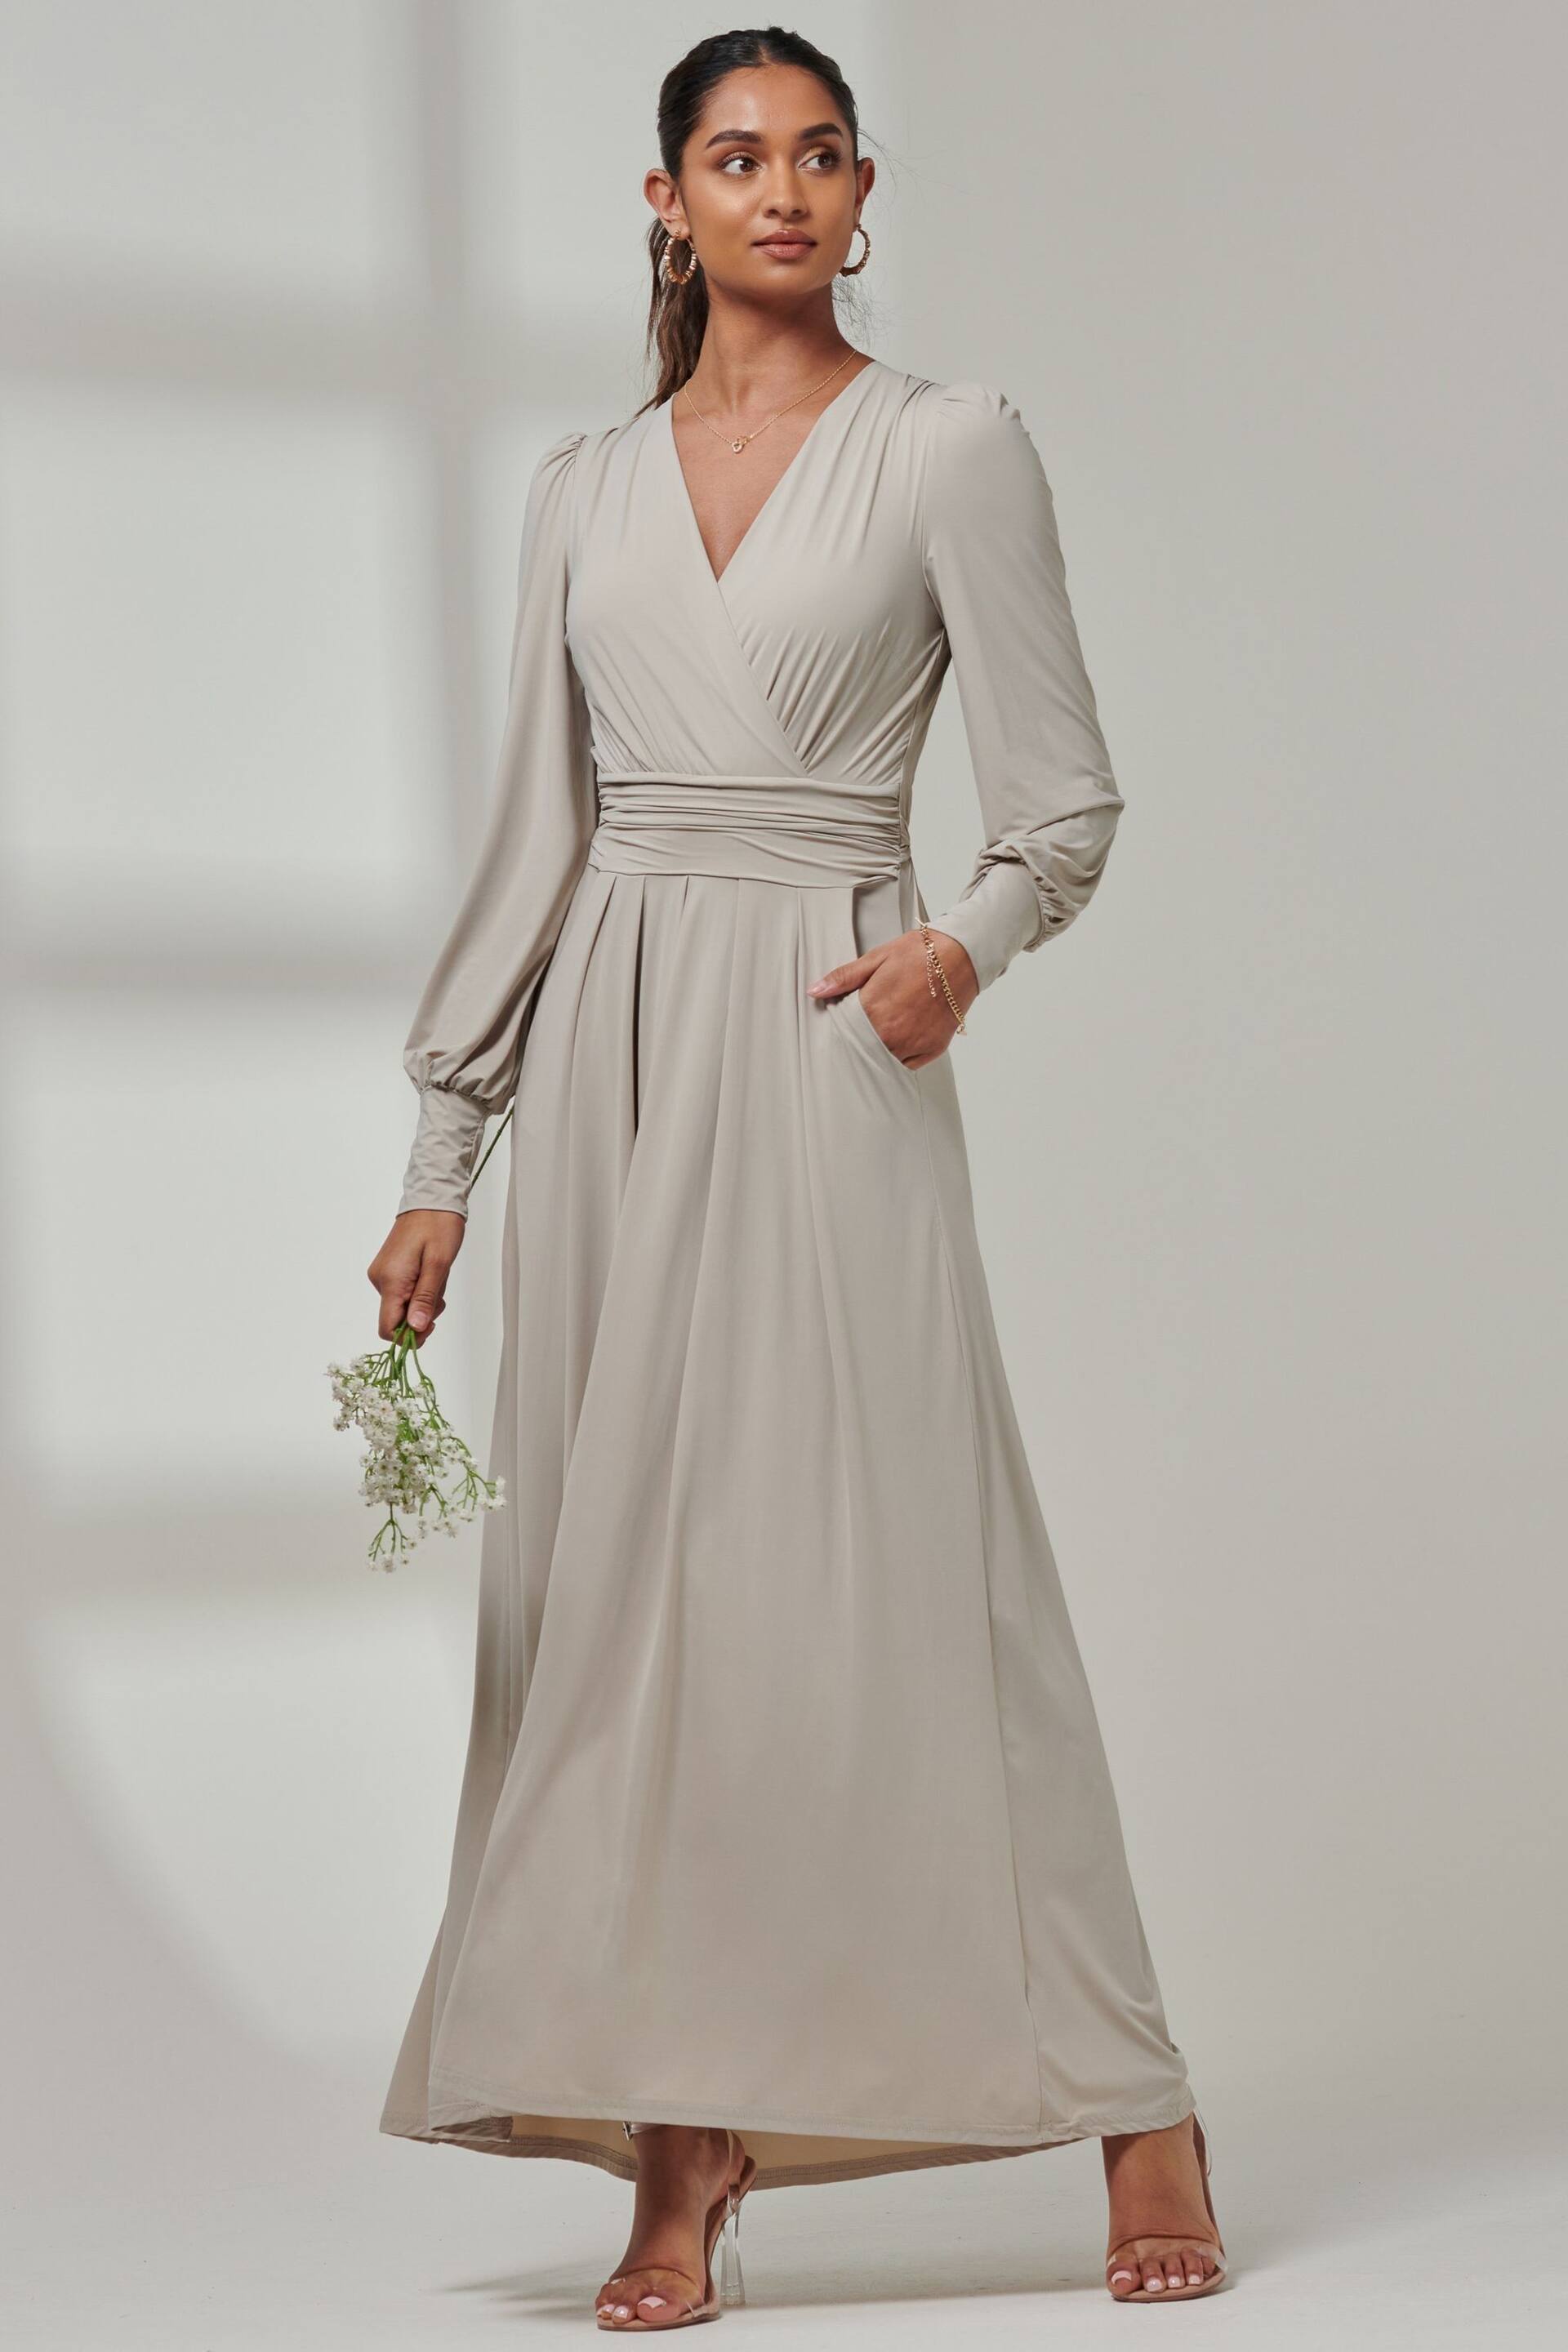 Jolie Moi Grey Giulia Long Sleeve Maxi Dress - Image 1 of 5